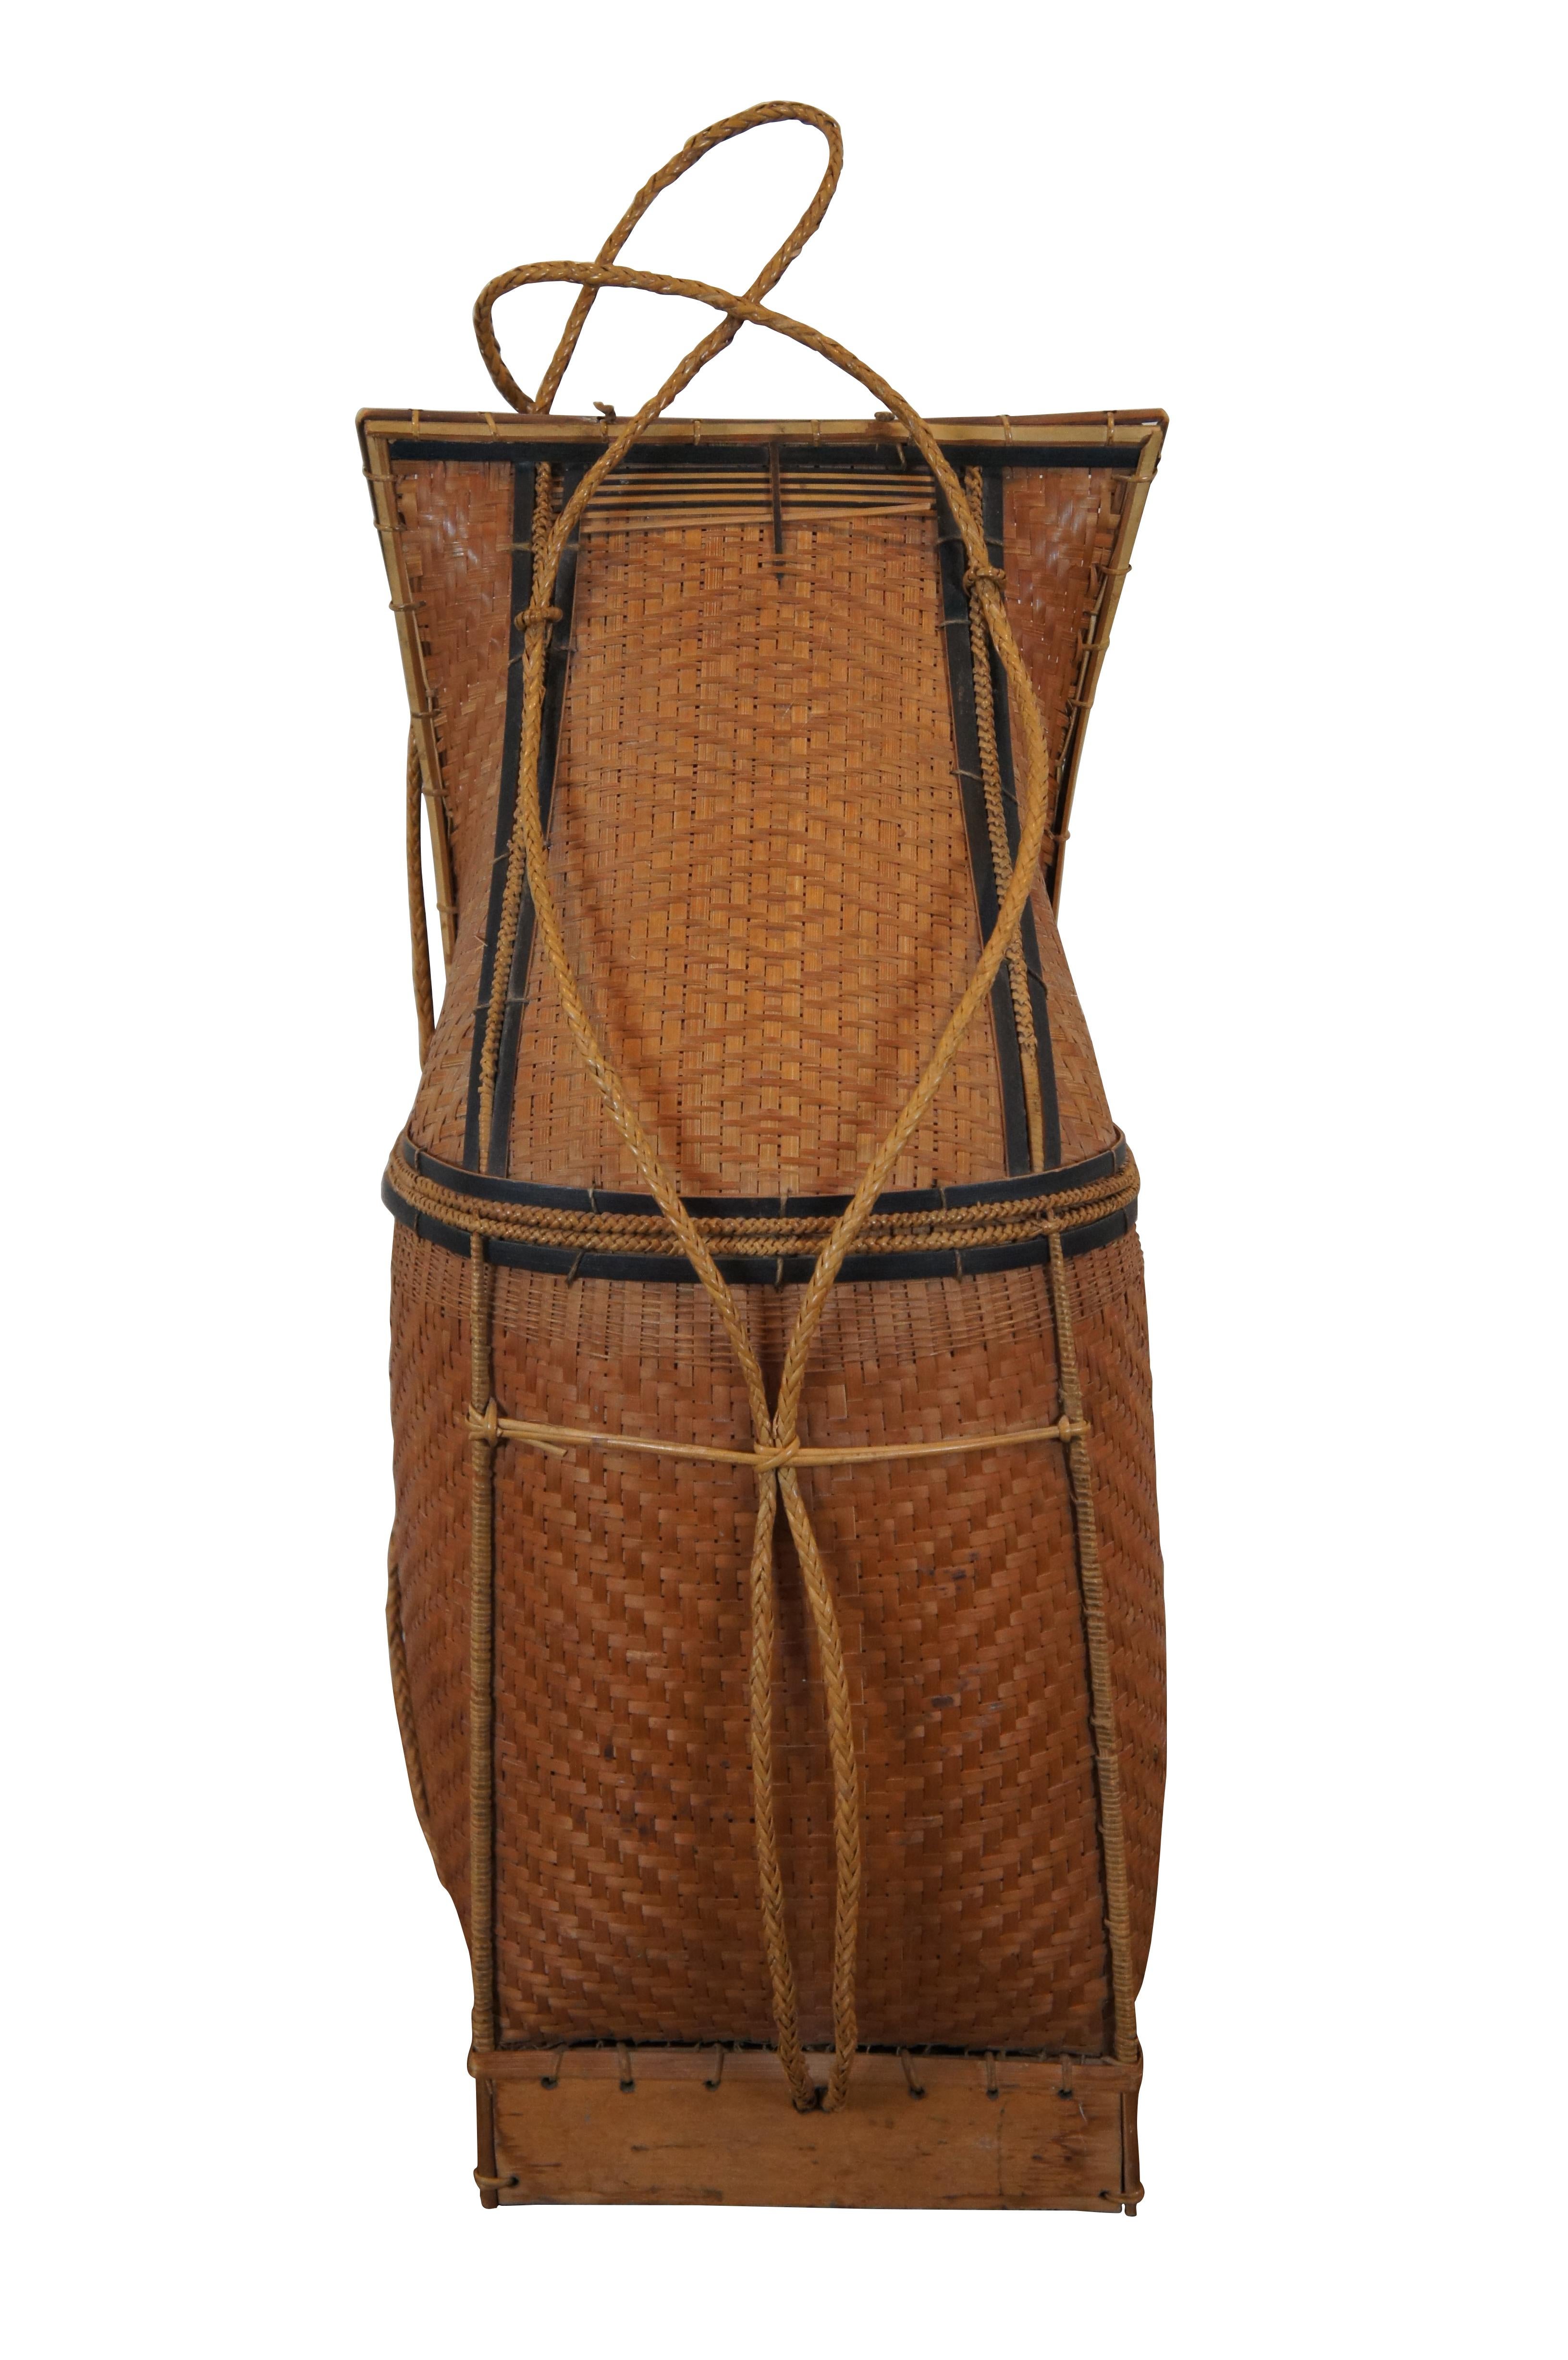 woven backpack basket